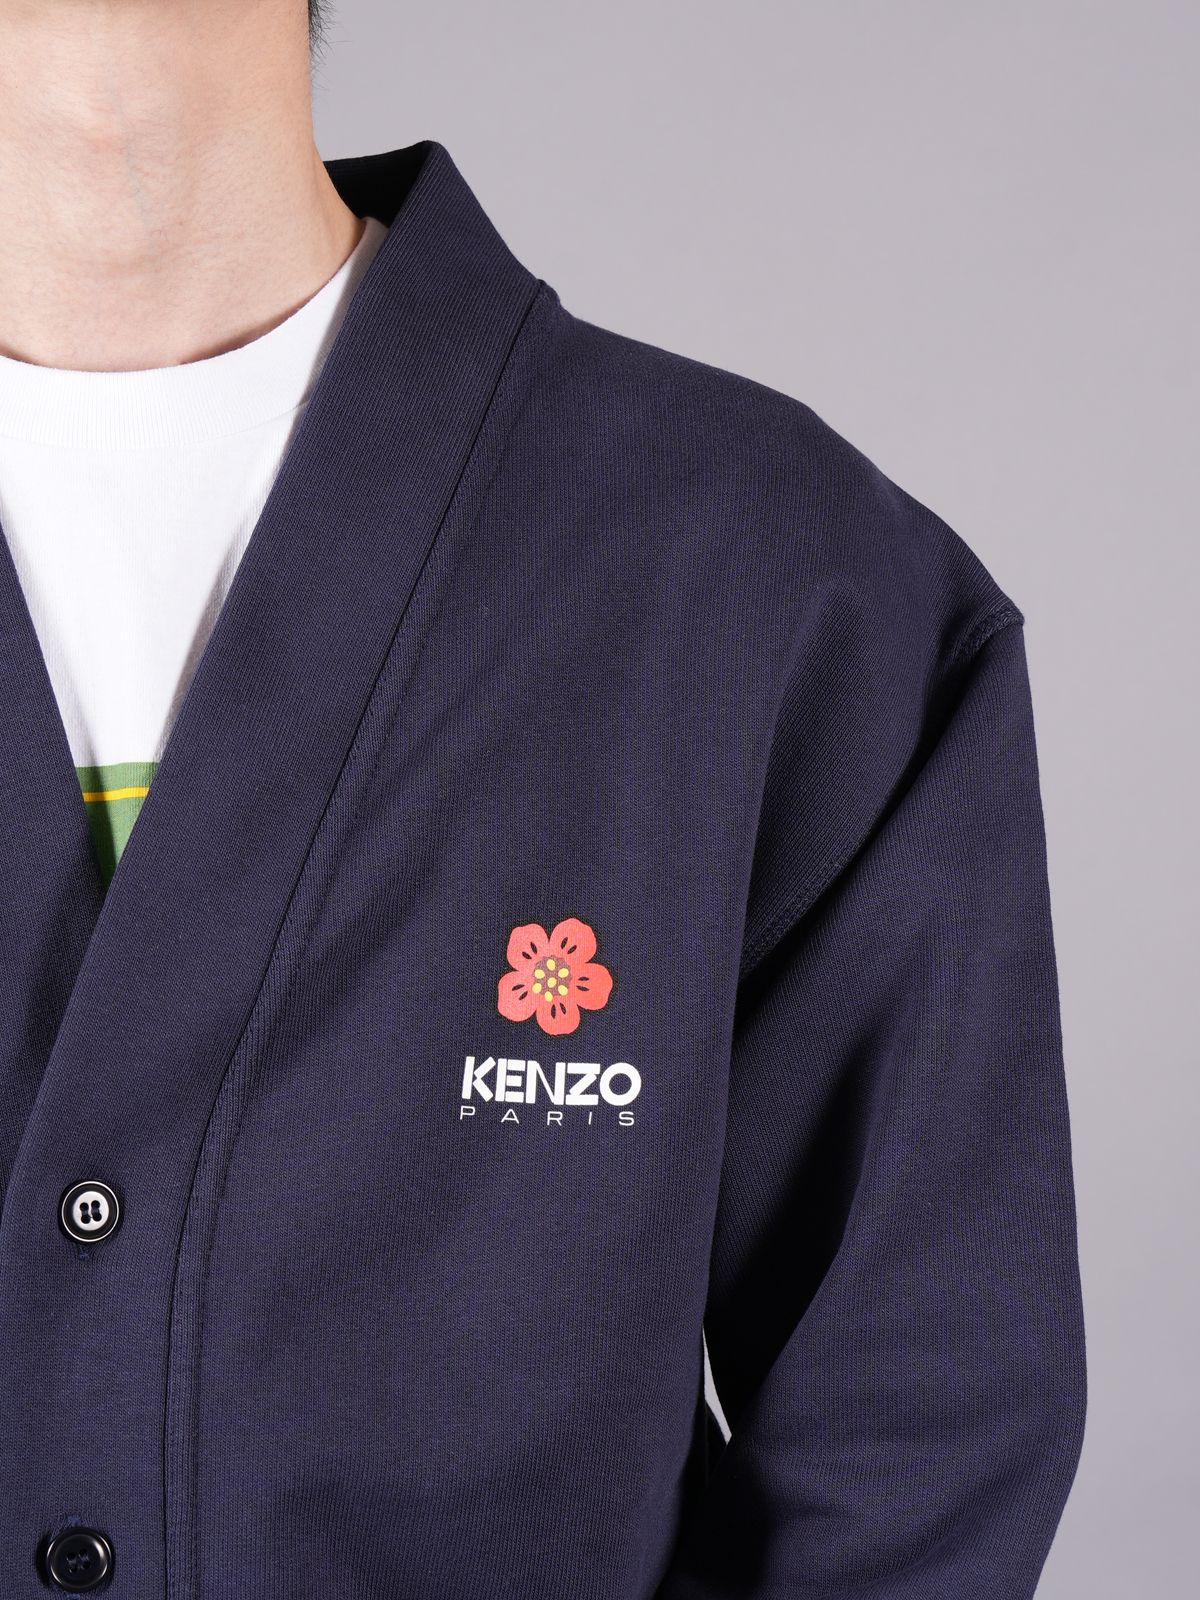 KENZO - Boke Flower Jersey Cardigan / ボケフラワー カーディガン